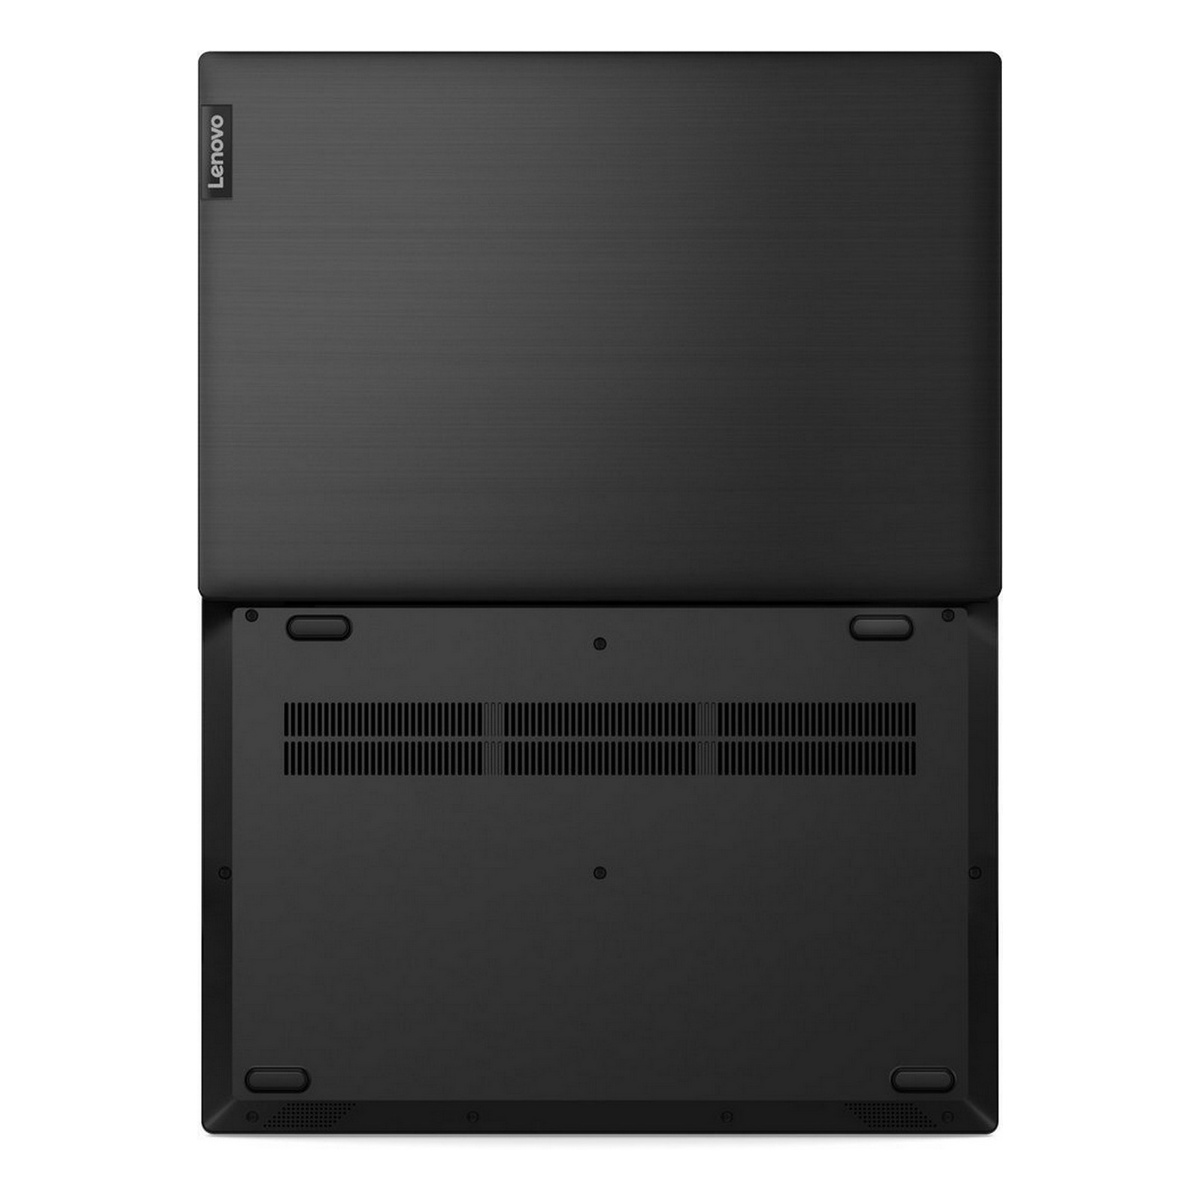 LENOVO IDEAPAD S145 15.6 FHD BLACK 81UT00C4CK vystavený kus